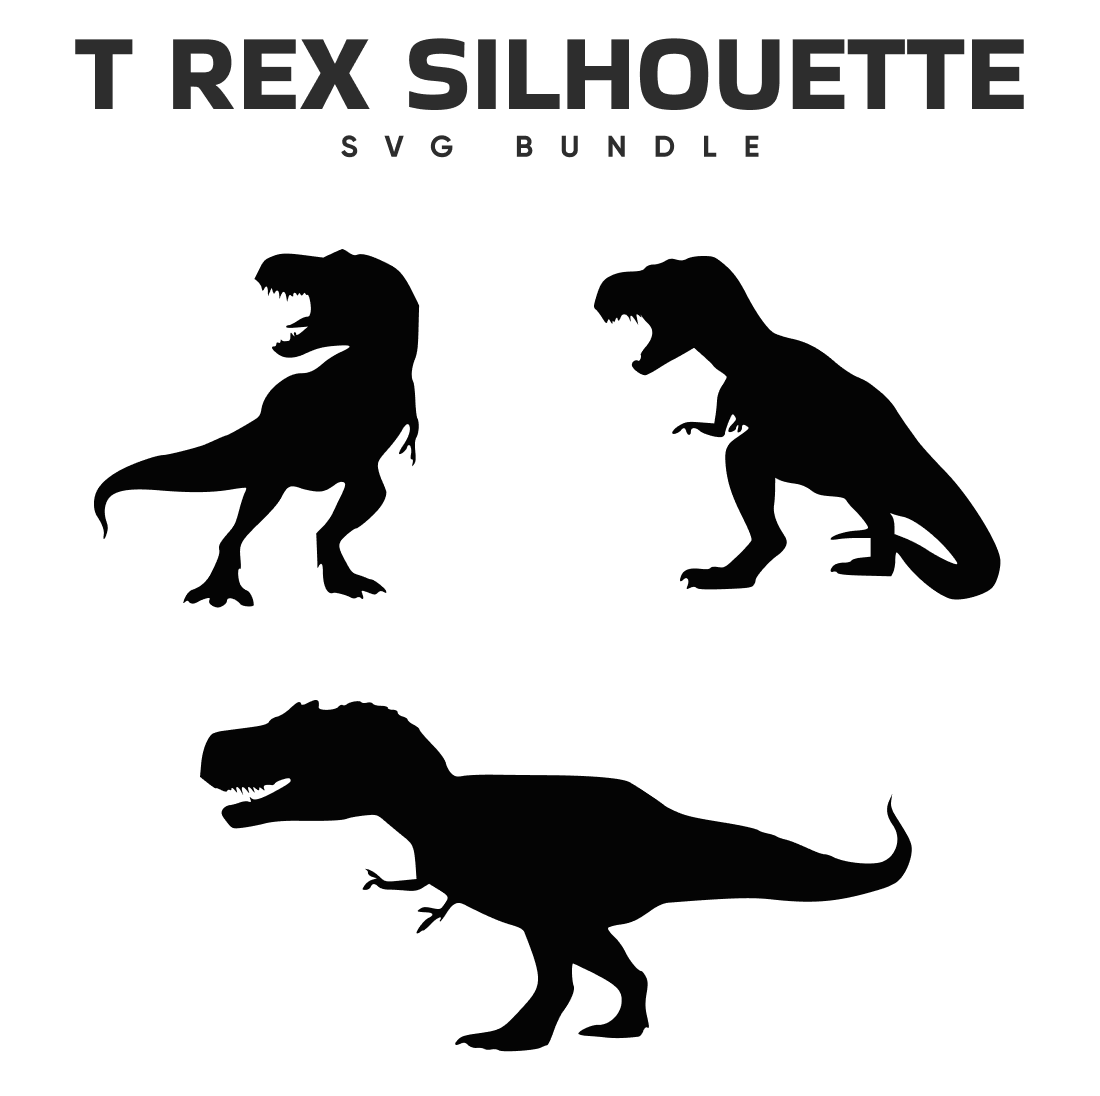 Three silhouettes of a t - rex dinosaur.